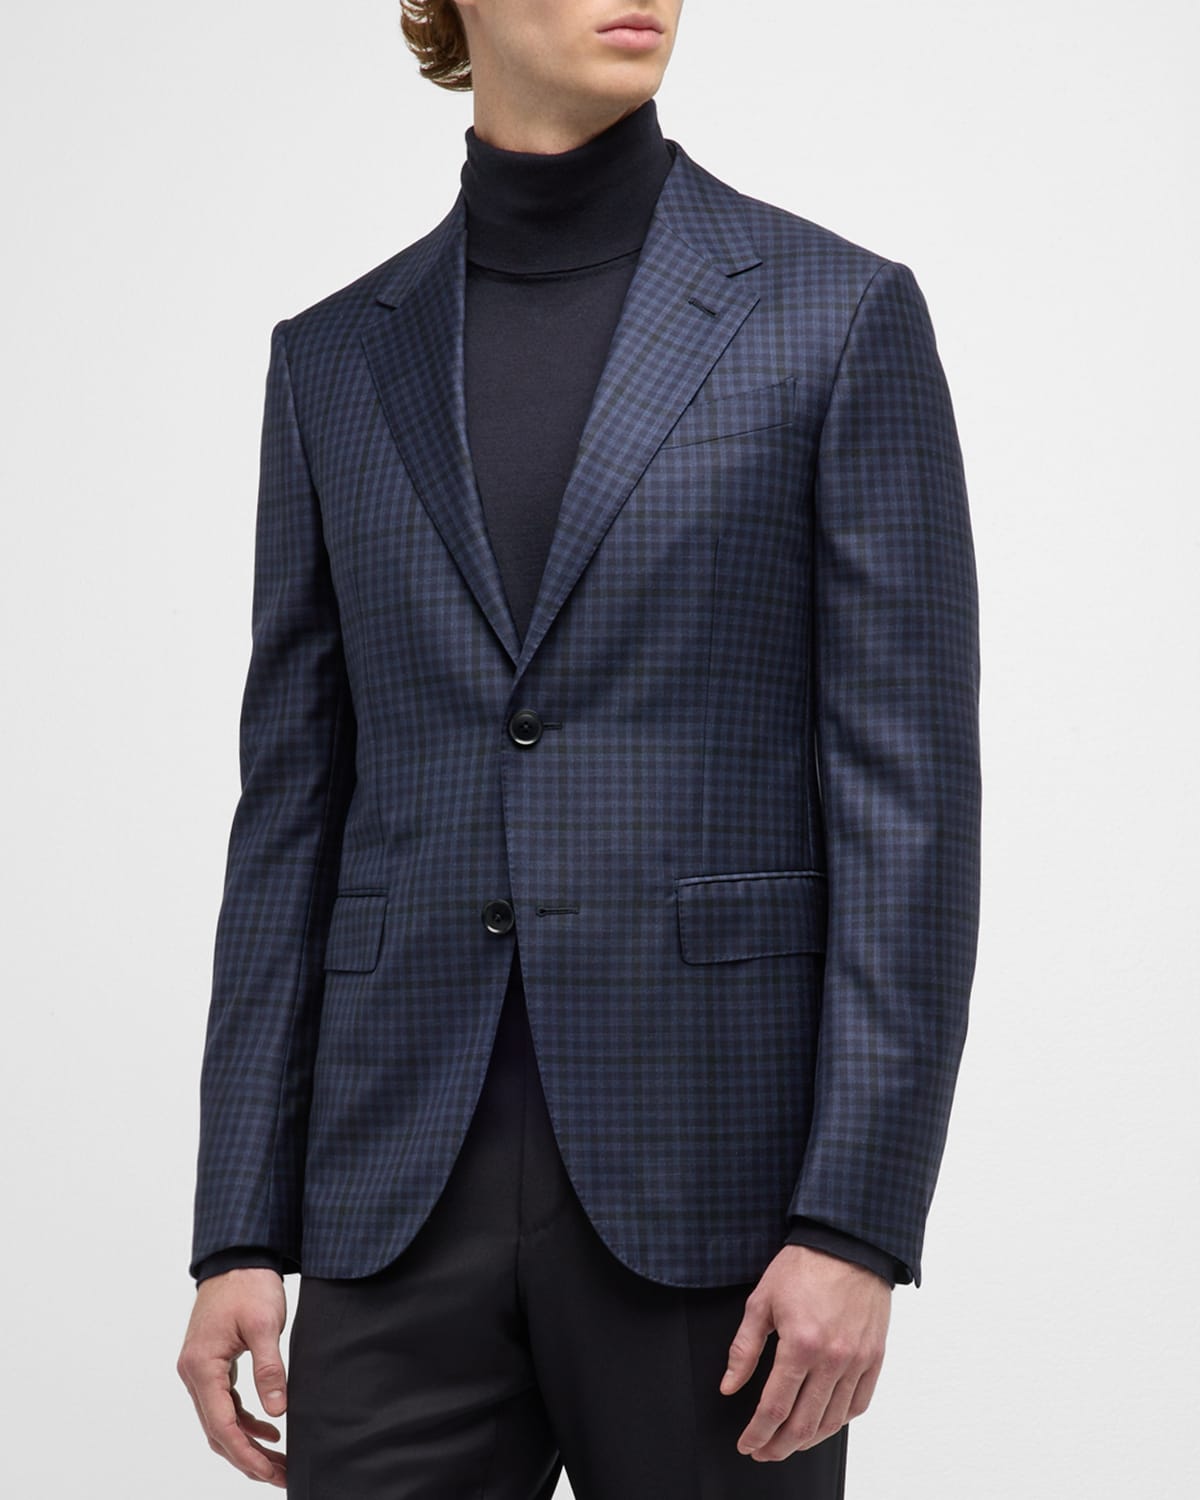 ZEGNA Men's Wool Plaid Sport Coat | Neiman Marcus